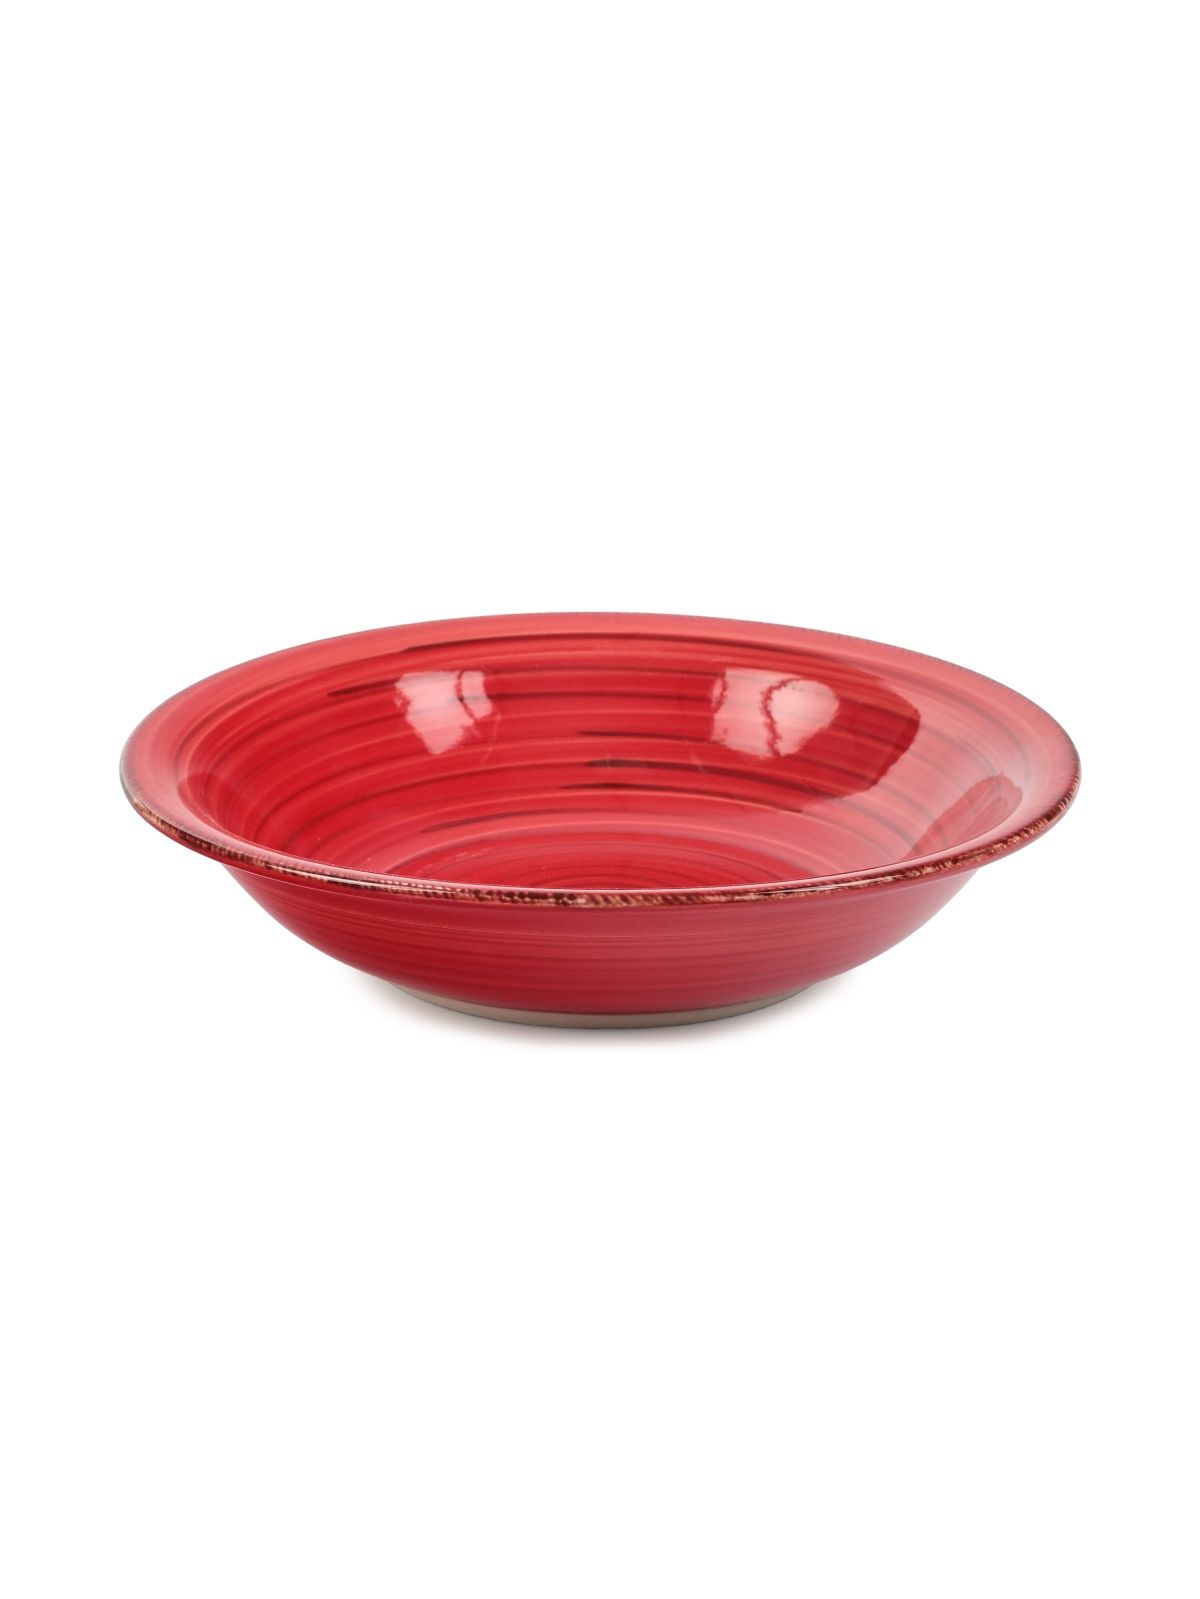 Тарелка суповая SCARLET 21см DOMENIK DMD003 тарелка domenik scarlet 21см глубокая керамика